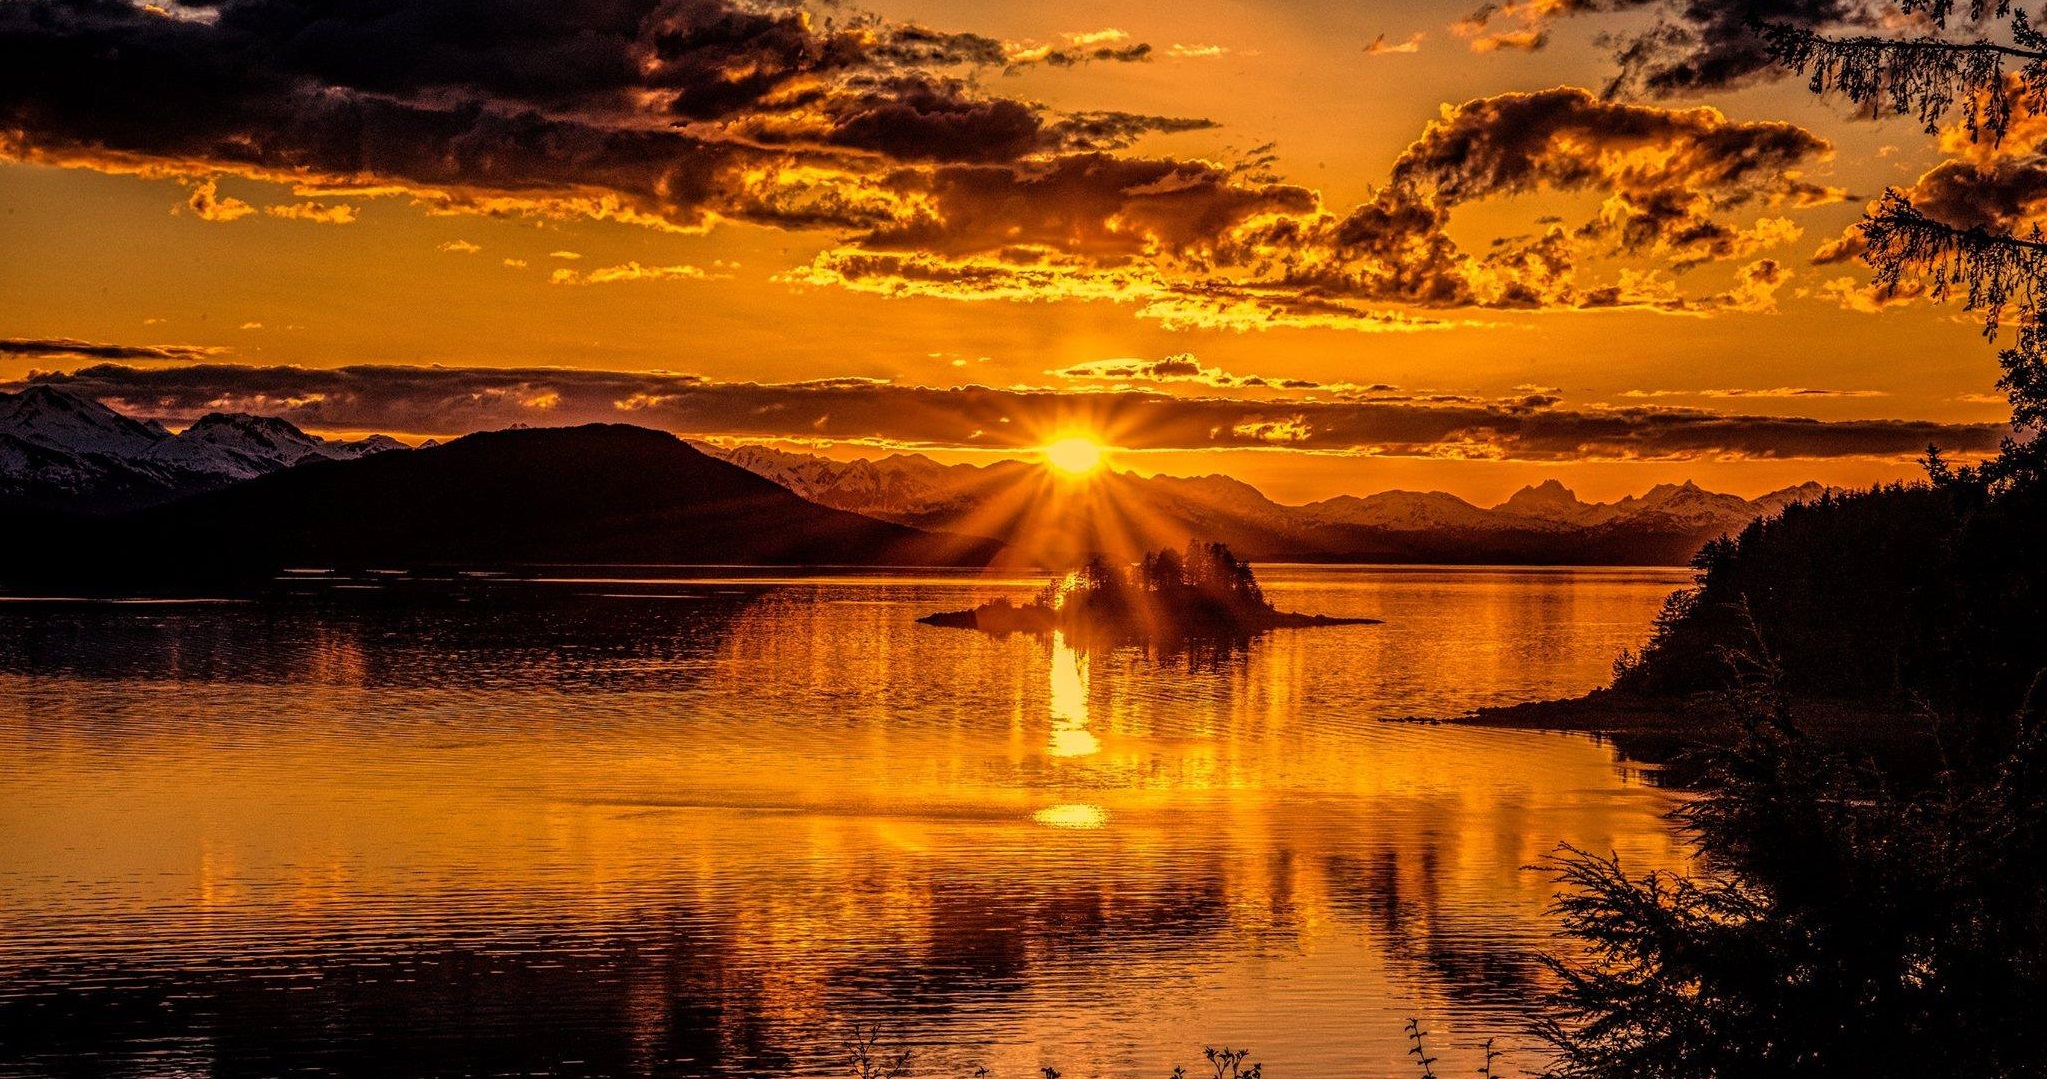 "Another stellar sunset at Inspiration Point. (Tee Harbor - Juneau, AK)."